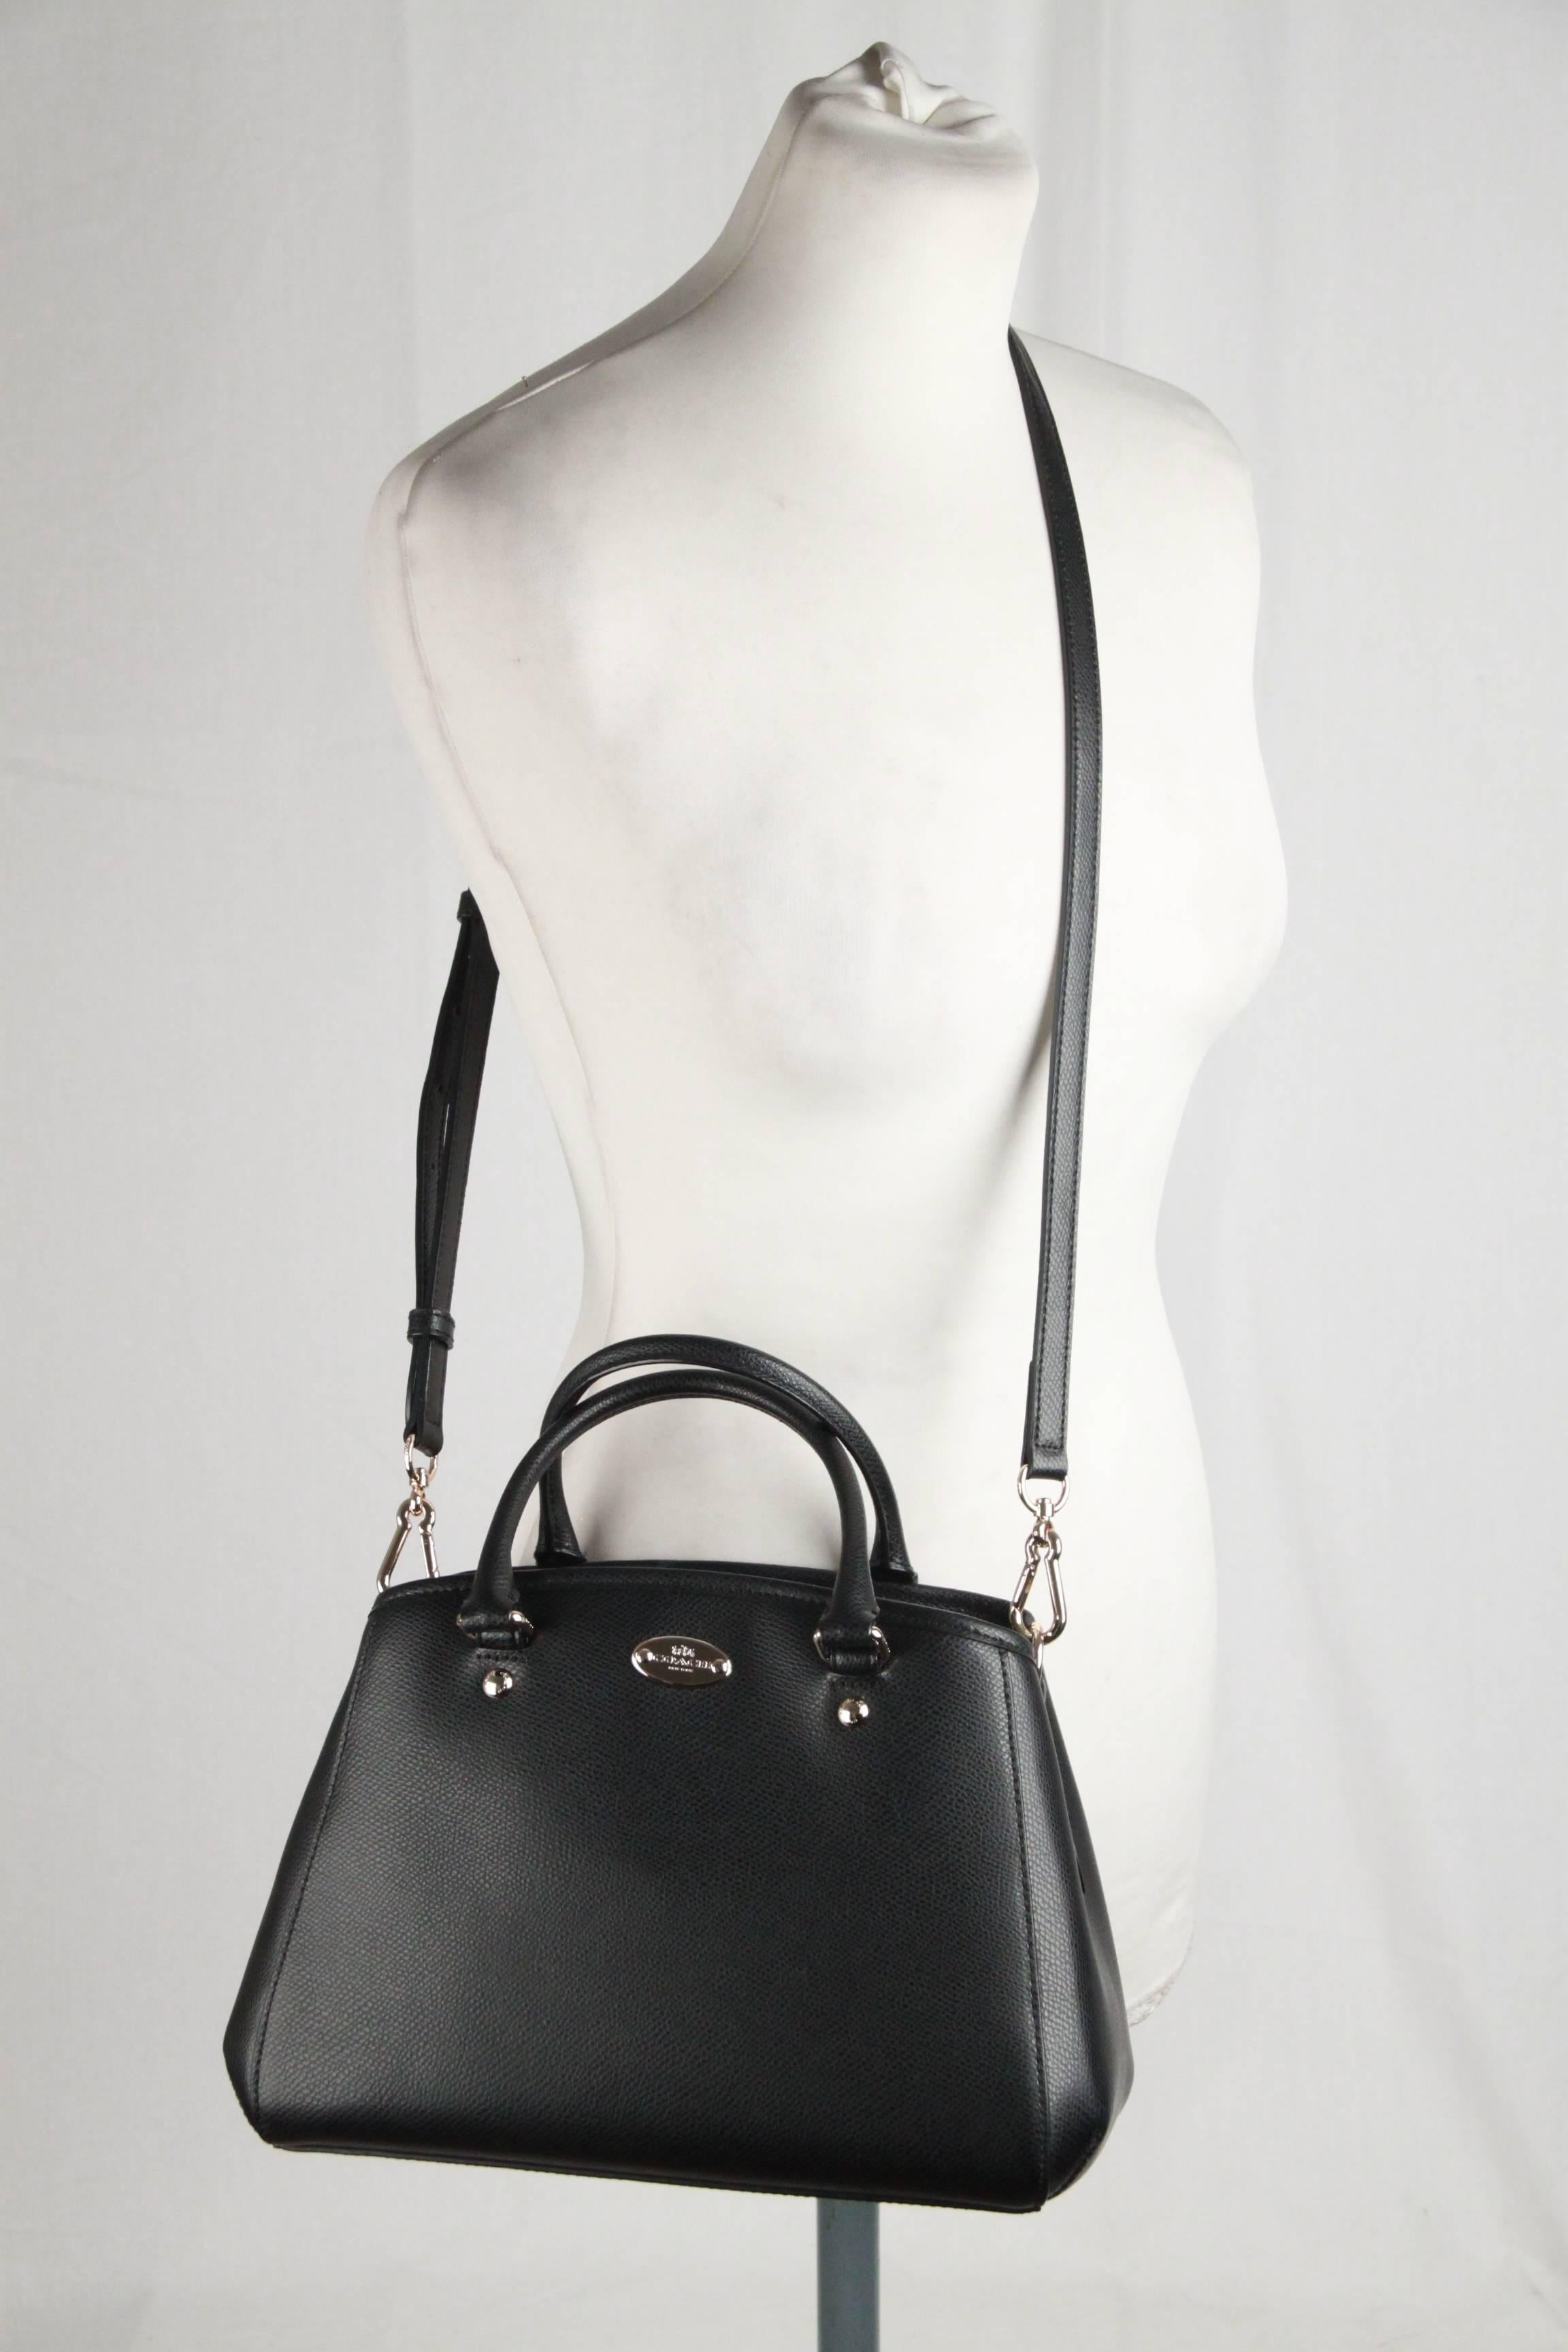 COACH Black Leather Small MARGOT Bag HANDBAG w/ Strap 3